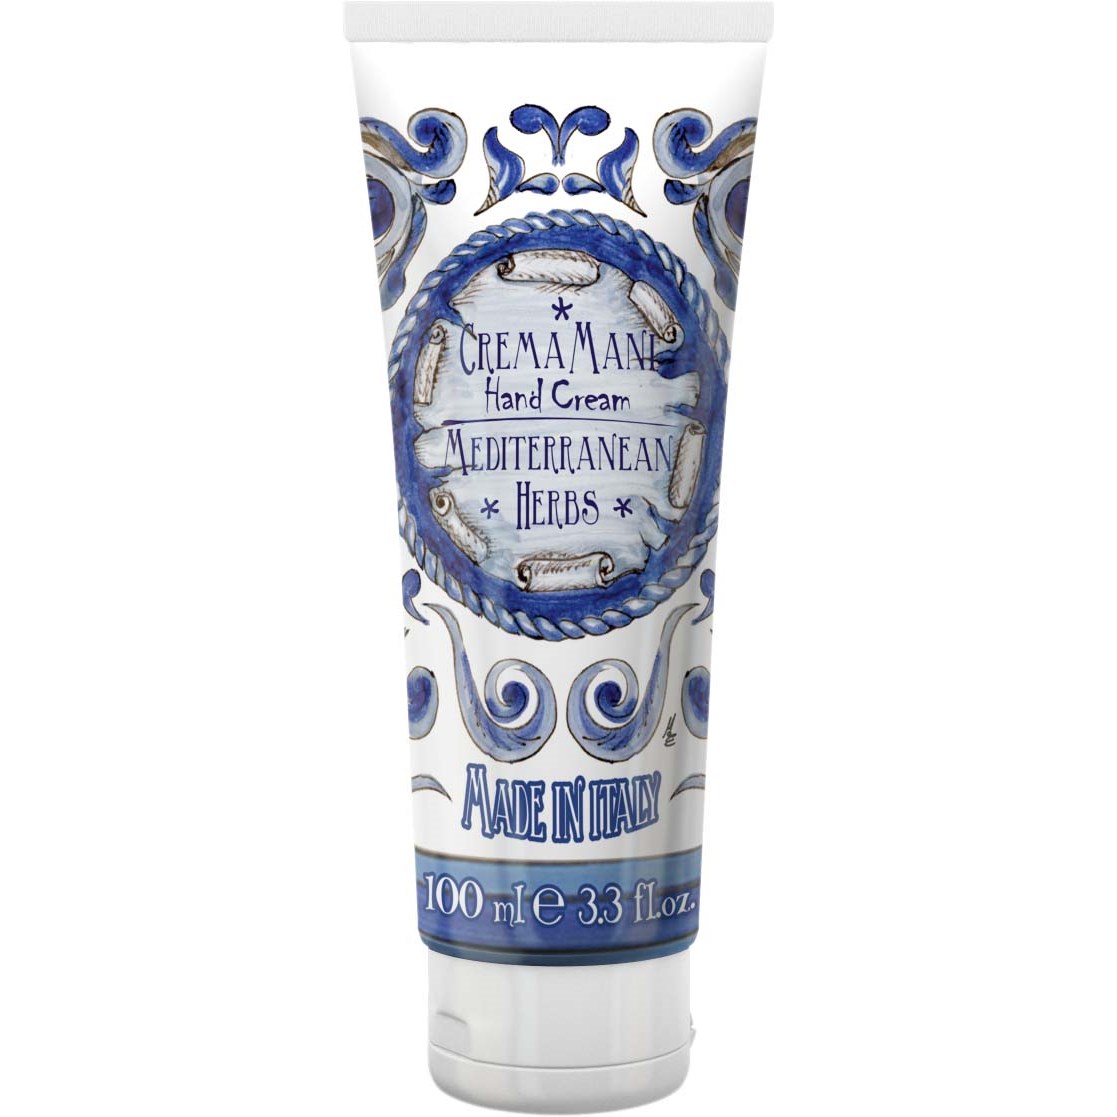 Läs mer om Rudy Midterraenan Herbs Le Maioliche Hand Cream 450 ml